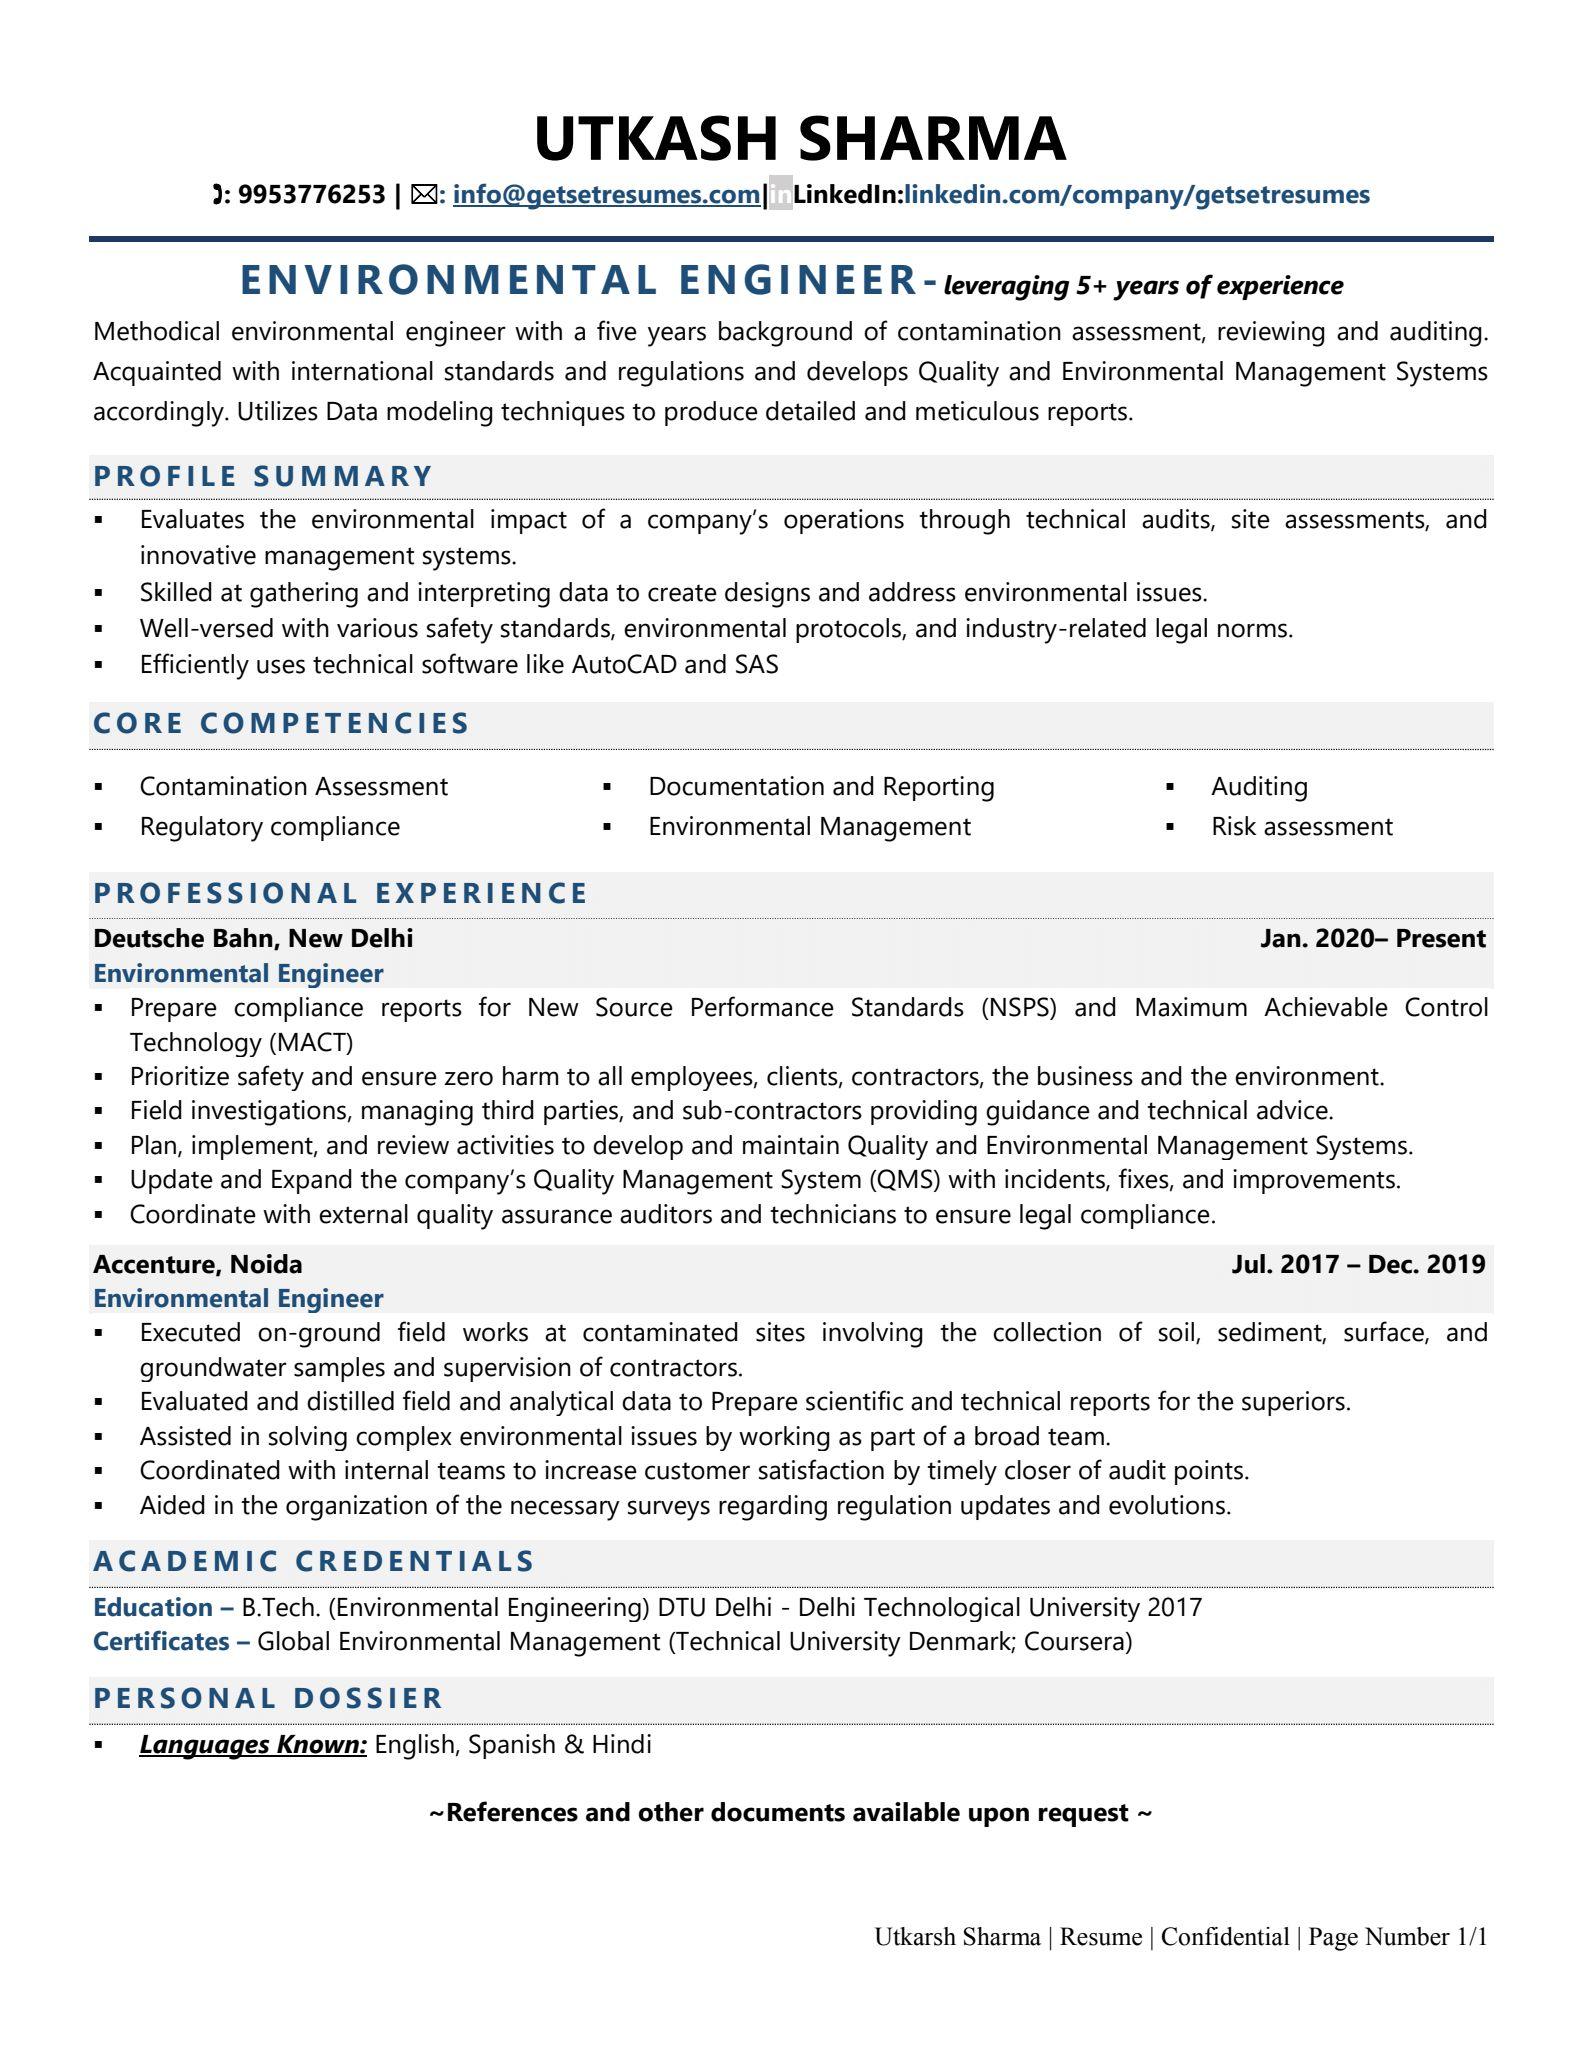 Environmental Engineer - Resume Example & Template